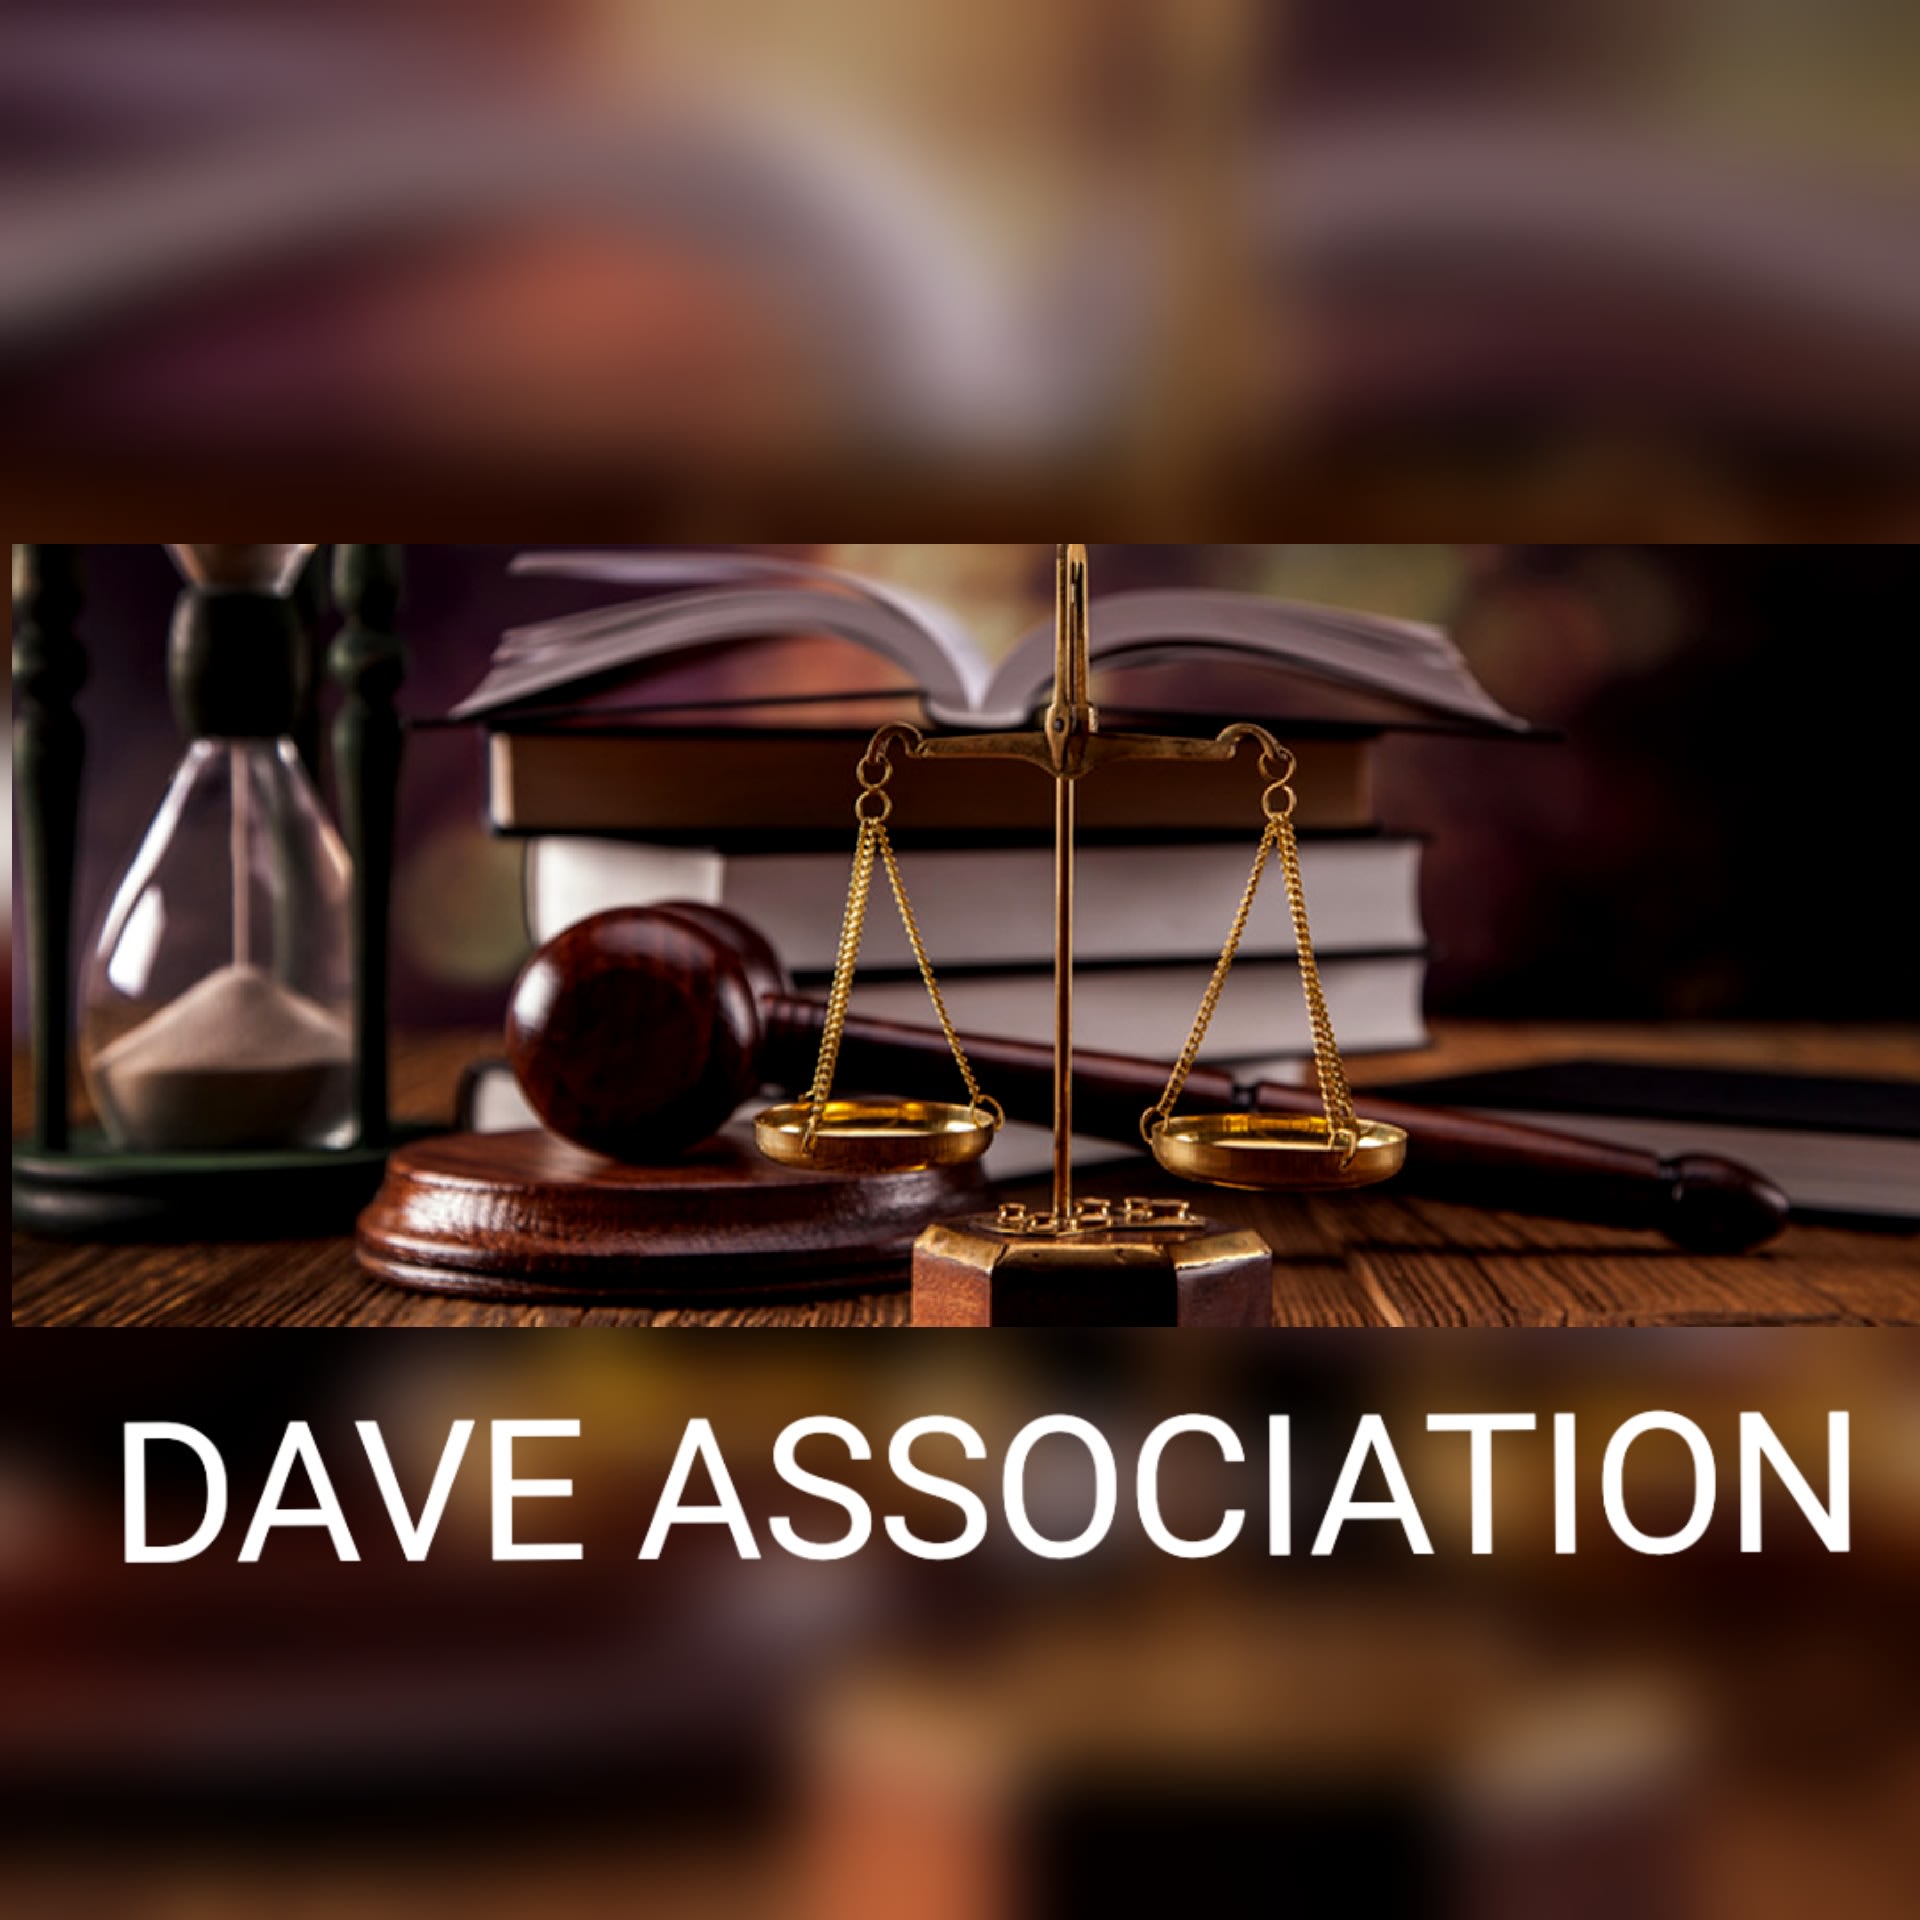 Dave Association